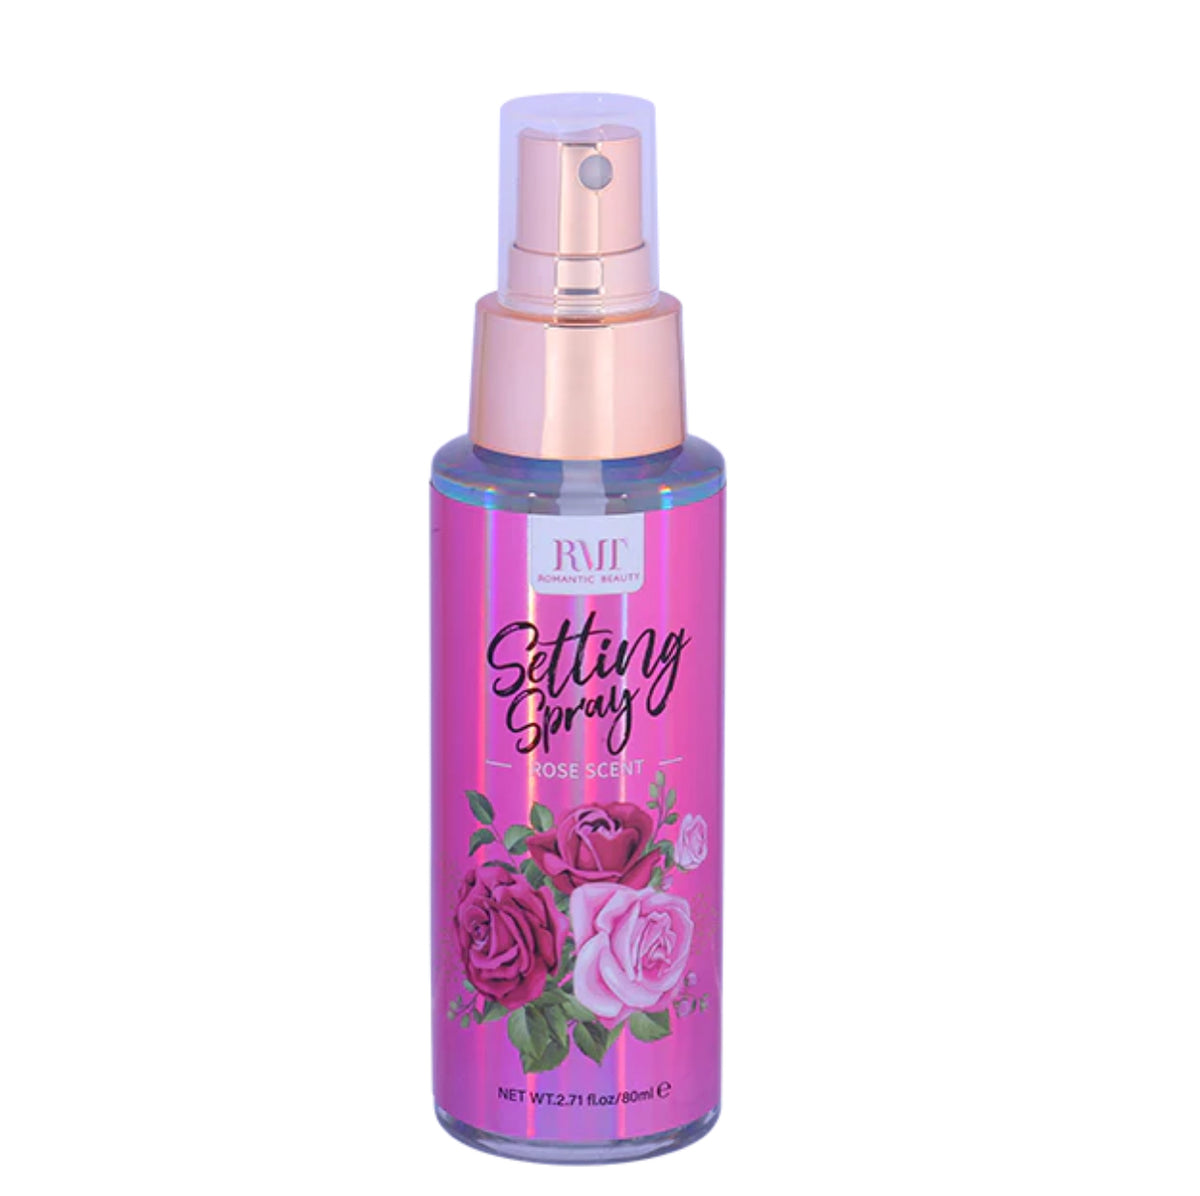 Rose scent Setting Spray